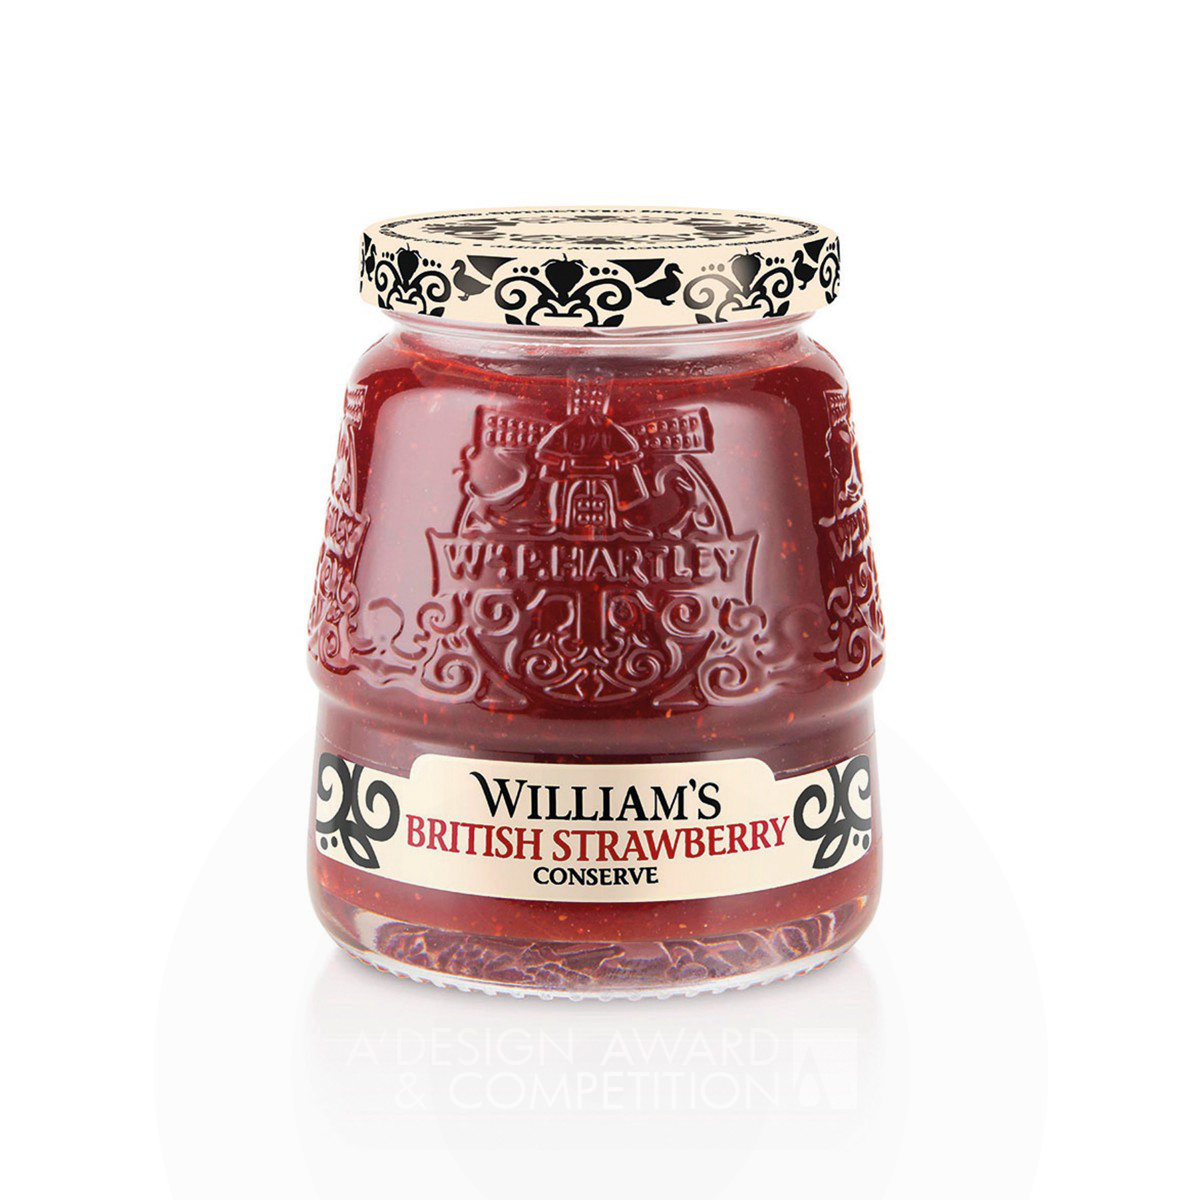 William's Conserve Jam by Springetts Brand Design